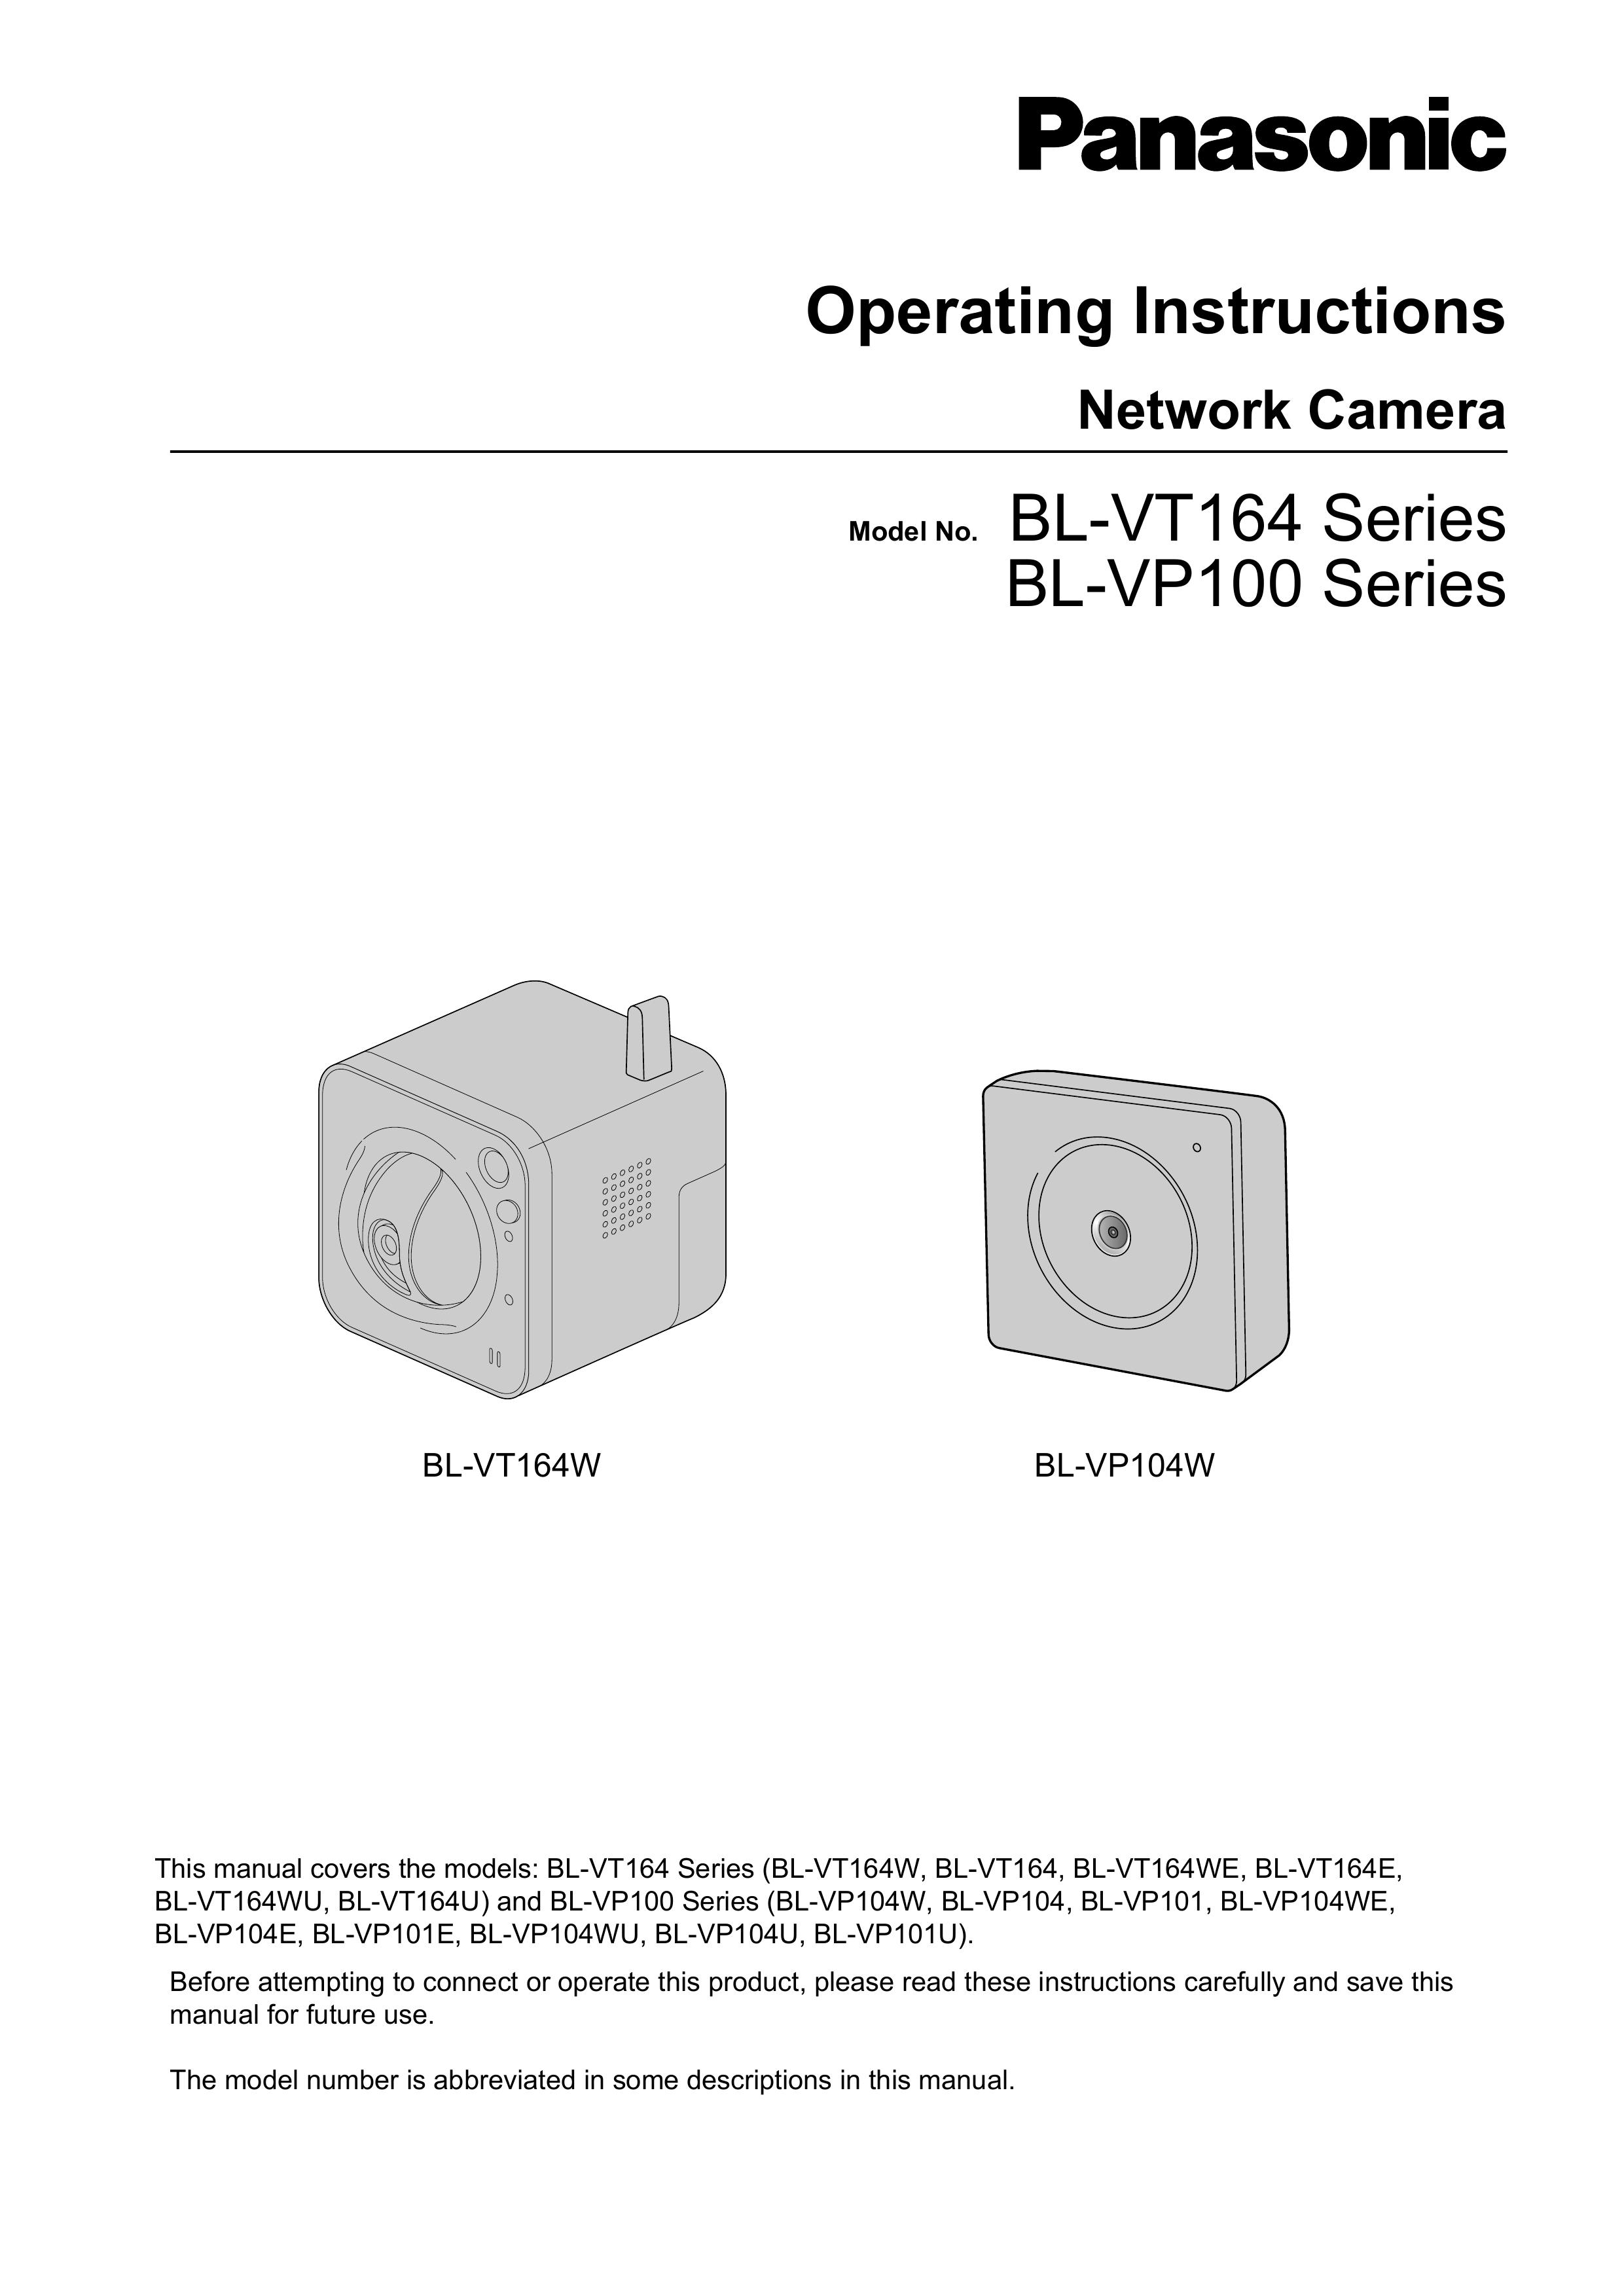 Panasonic BL-VP100 Security Camera User Manual